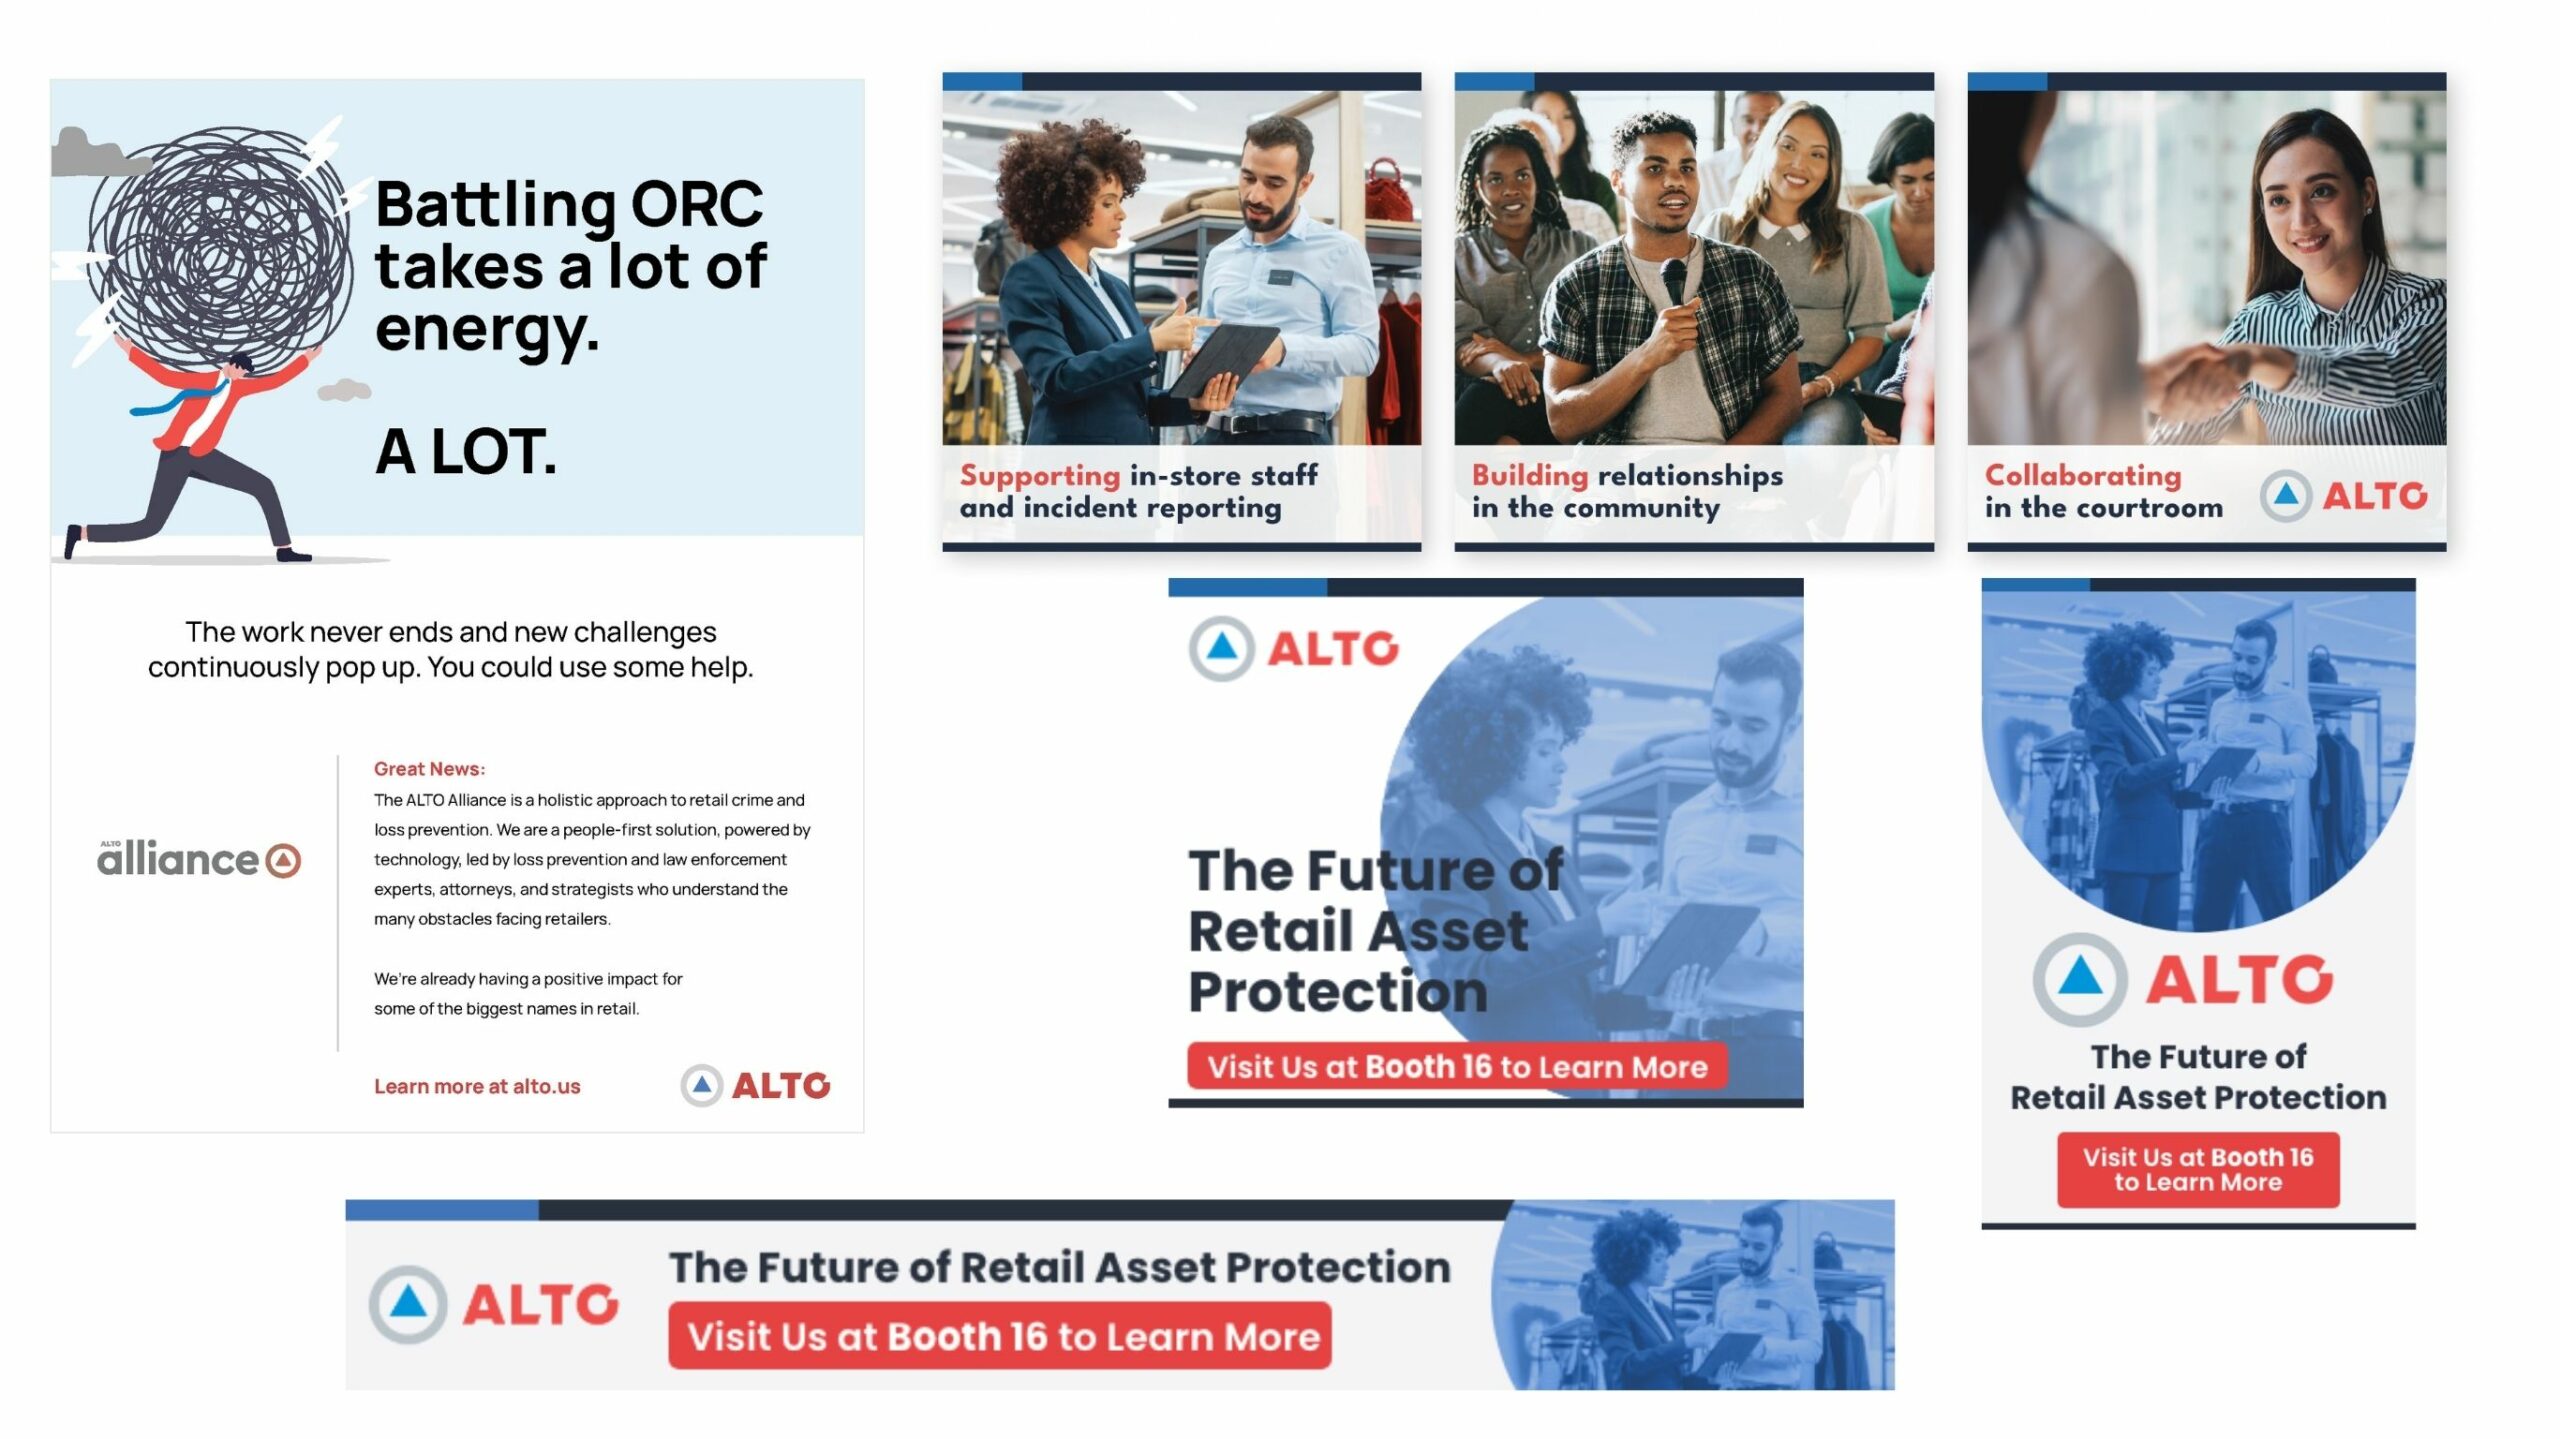 Print and digital ads for ALTO